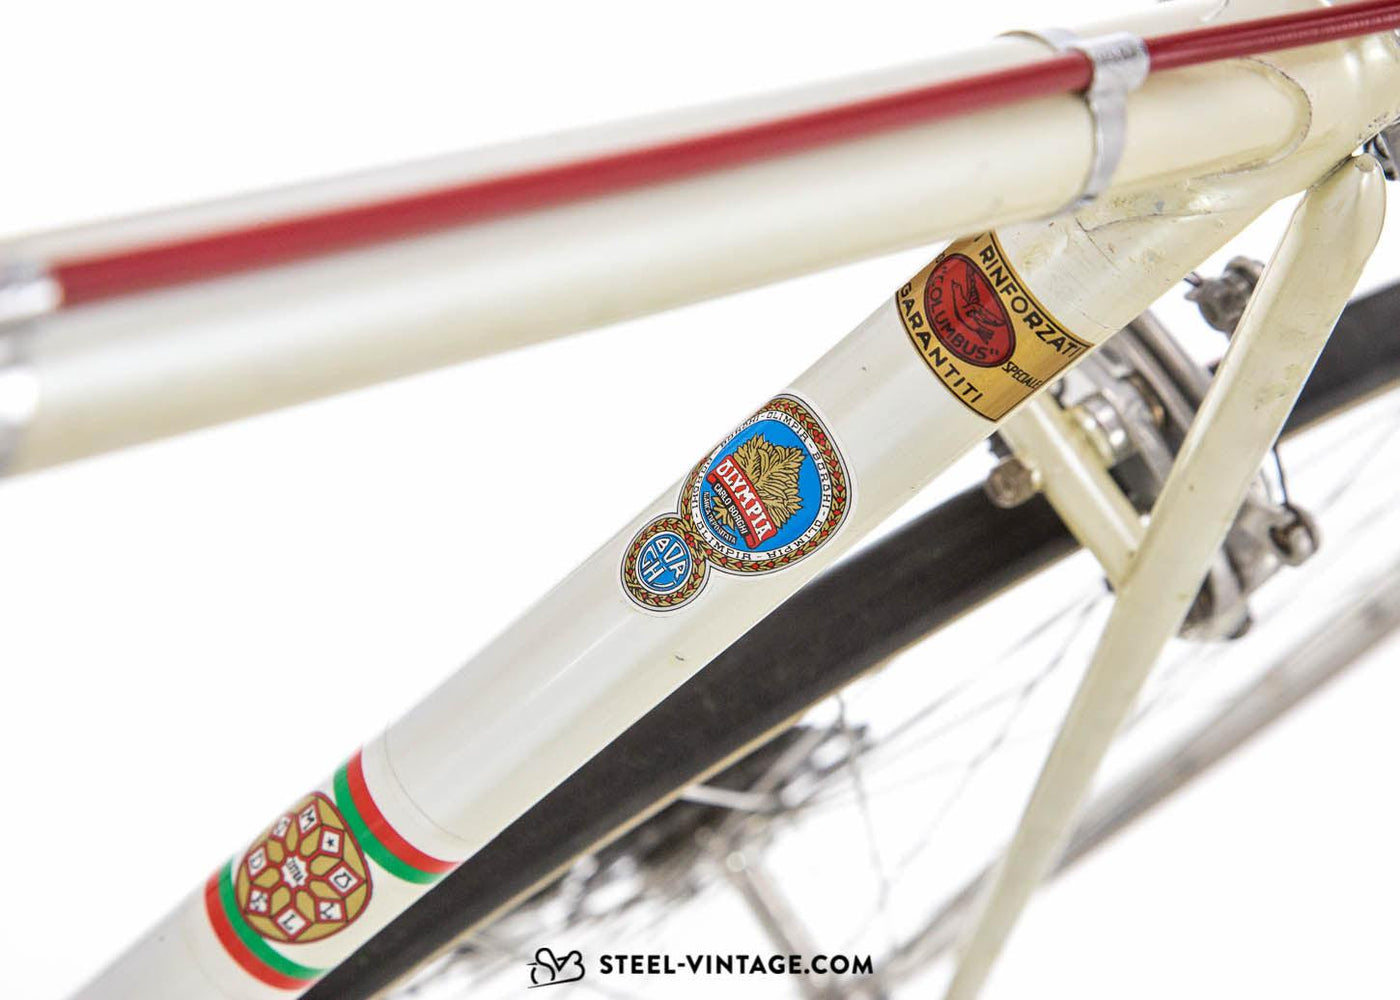 Olympia Special Piuma Classic Road Bike 1970s - Steel Vintage Bikes